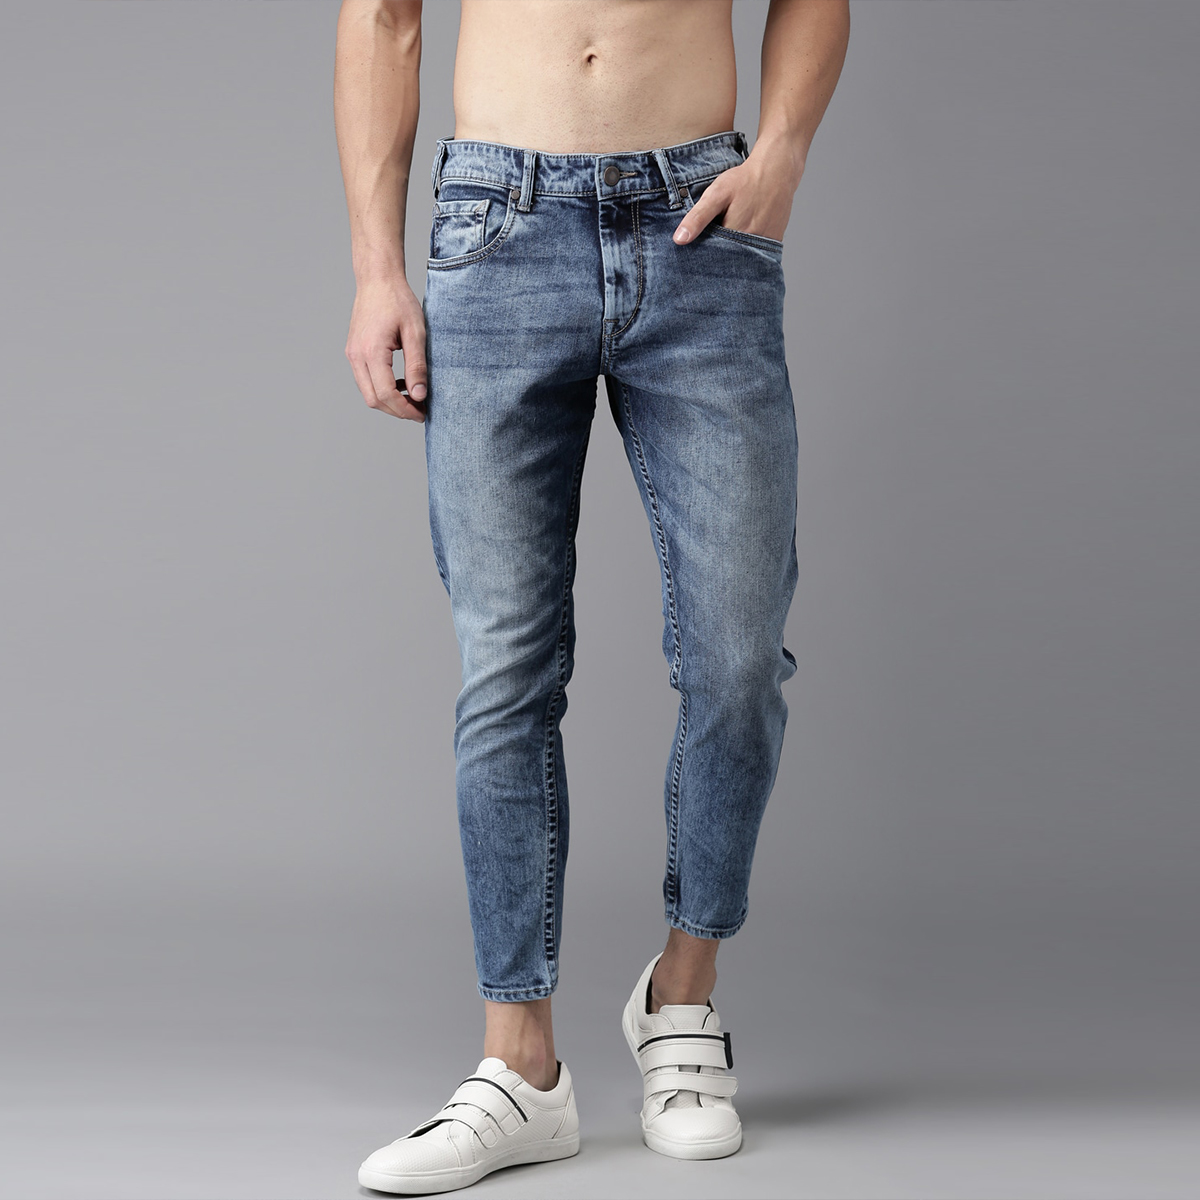 NZ-13097 Slim-fit Stretchable Denim Jeans Pant For Men - Deep Blue ...